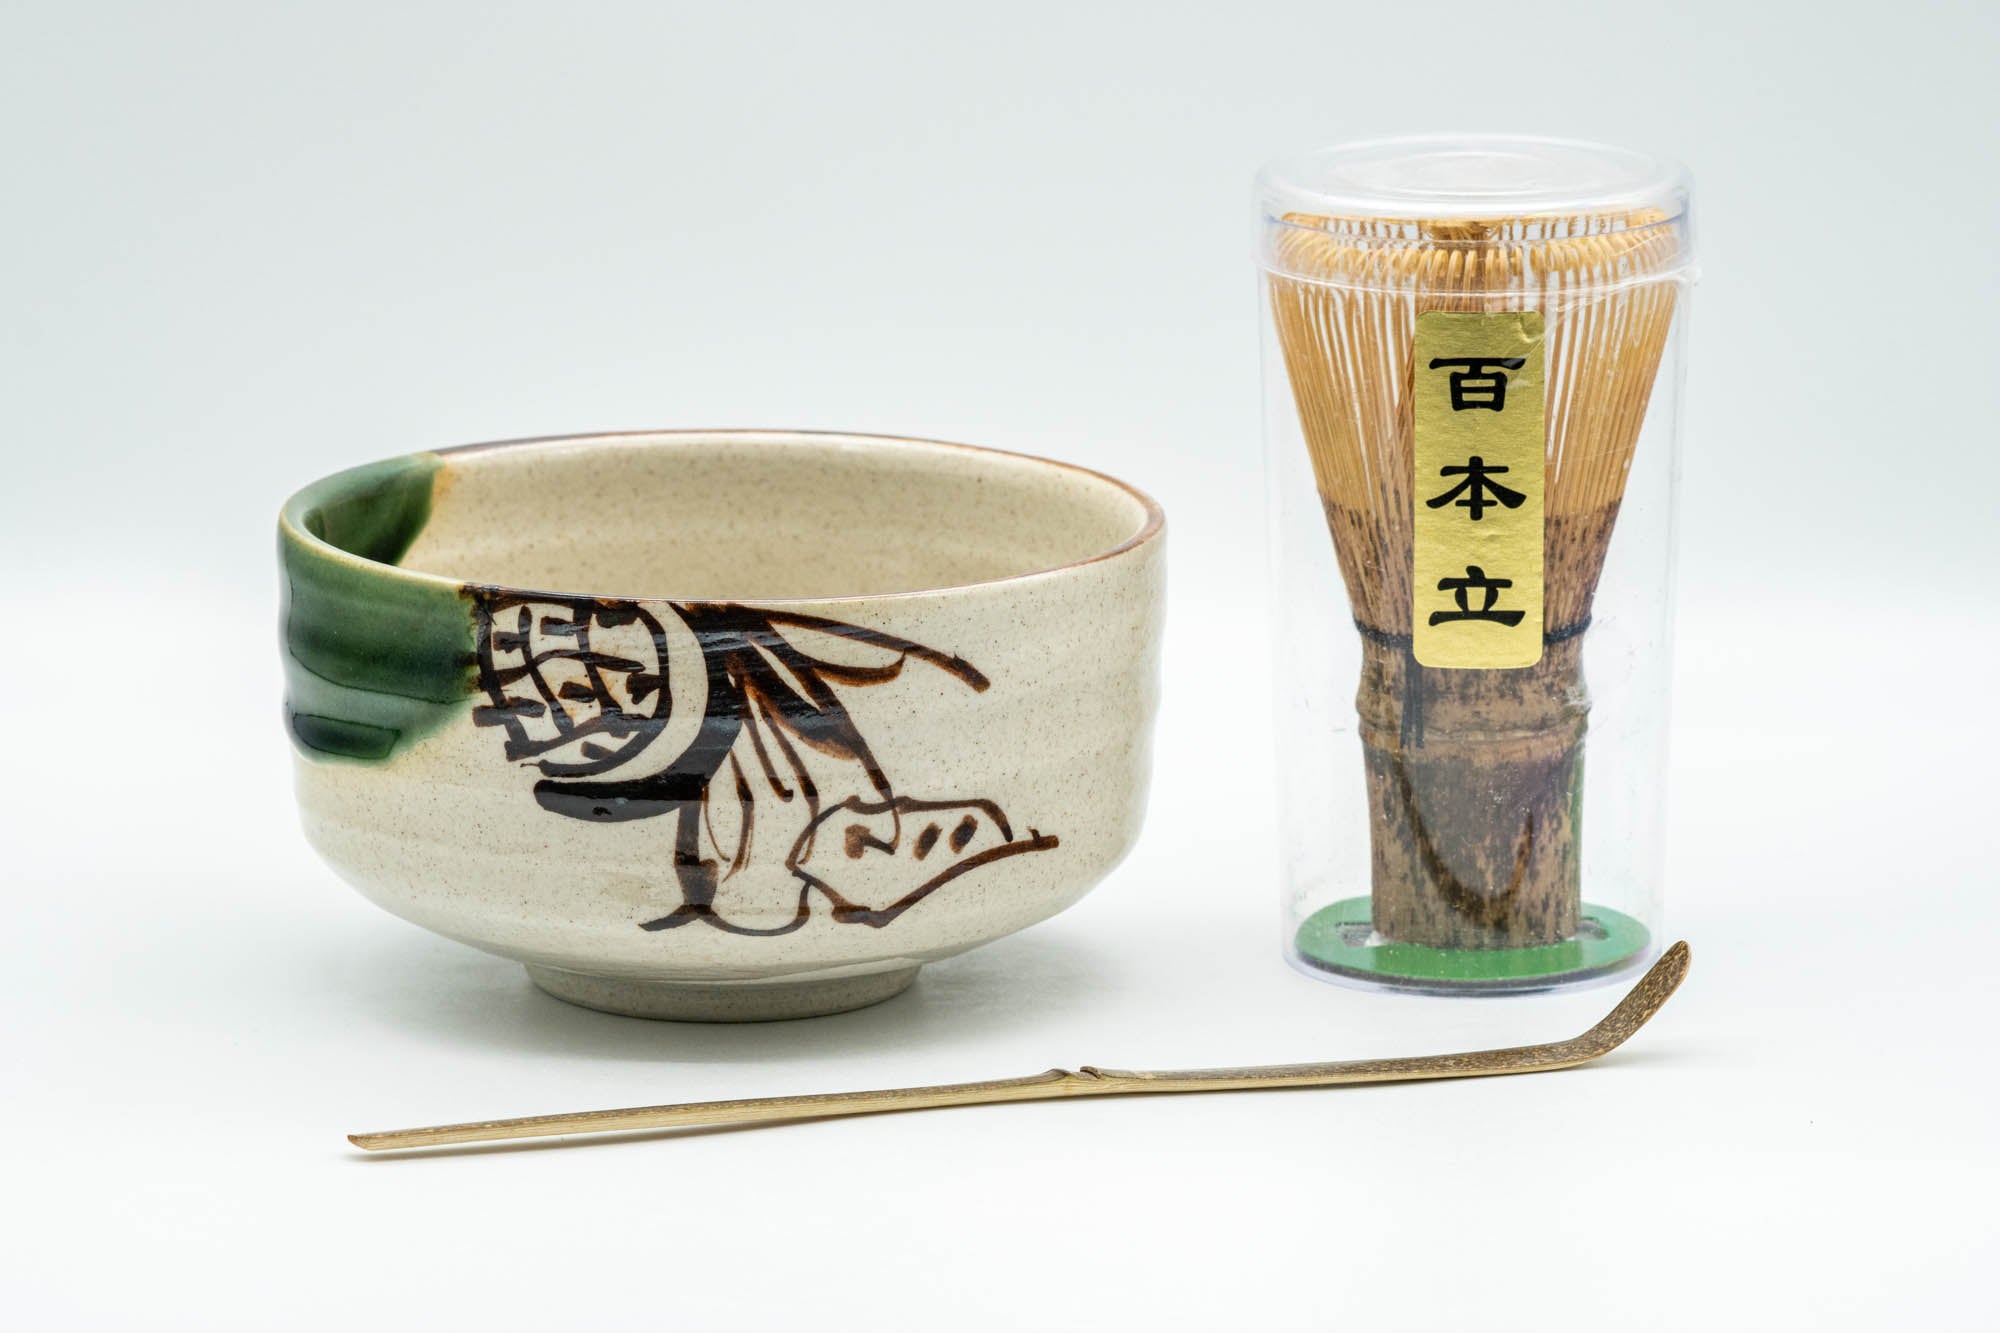 Japanese Matcha Set - 織部焼 Waisted Oribe-yaki chawan with Bamboo Chasen Whisk and Chashaku Scoop - 400ml